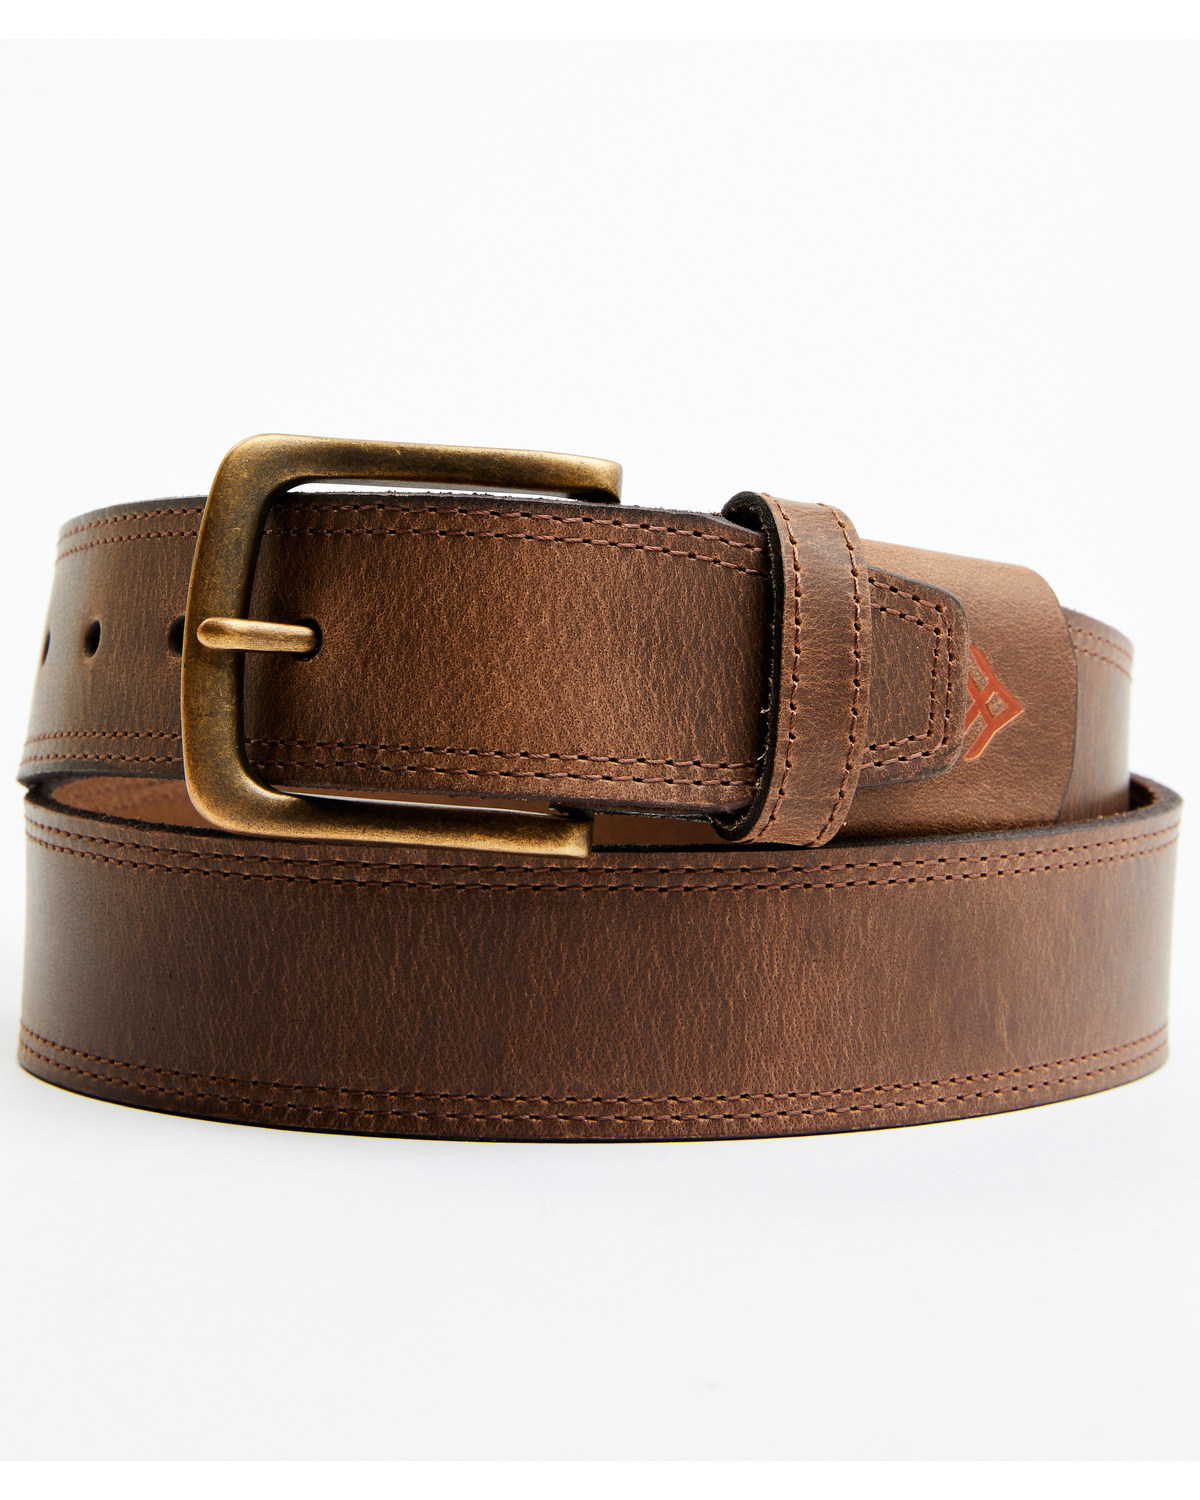 Hawx Men's Comfort Stretch Leather Belt